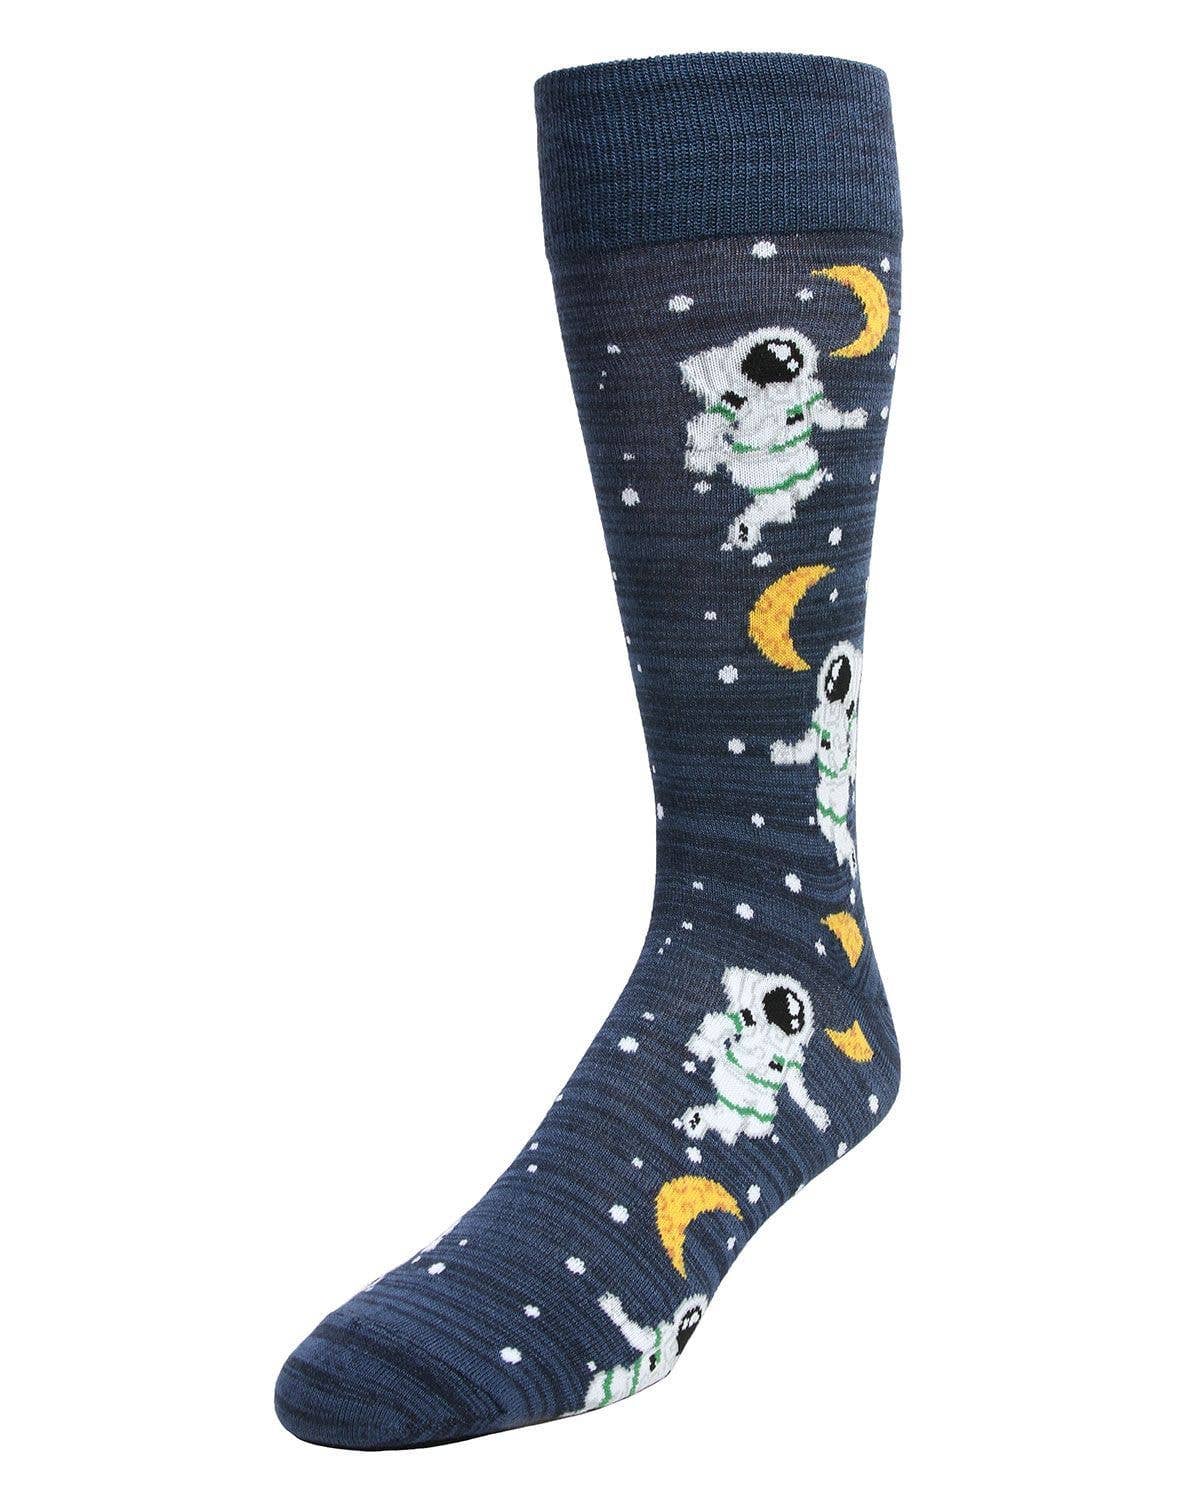 Stellar Moonwalk Astronaut - Men's Socks Size 11-13